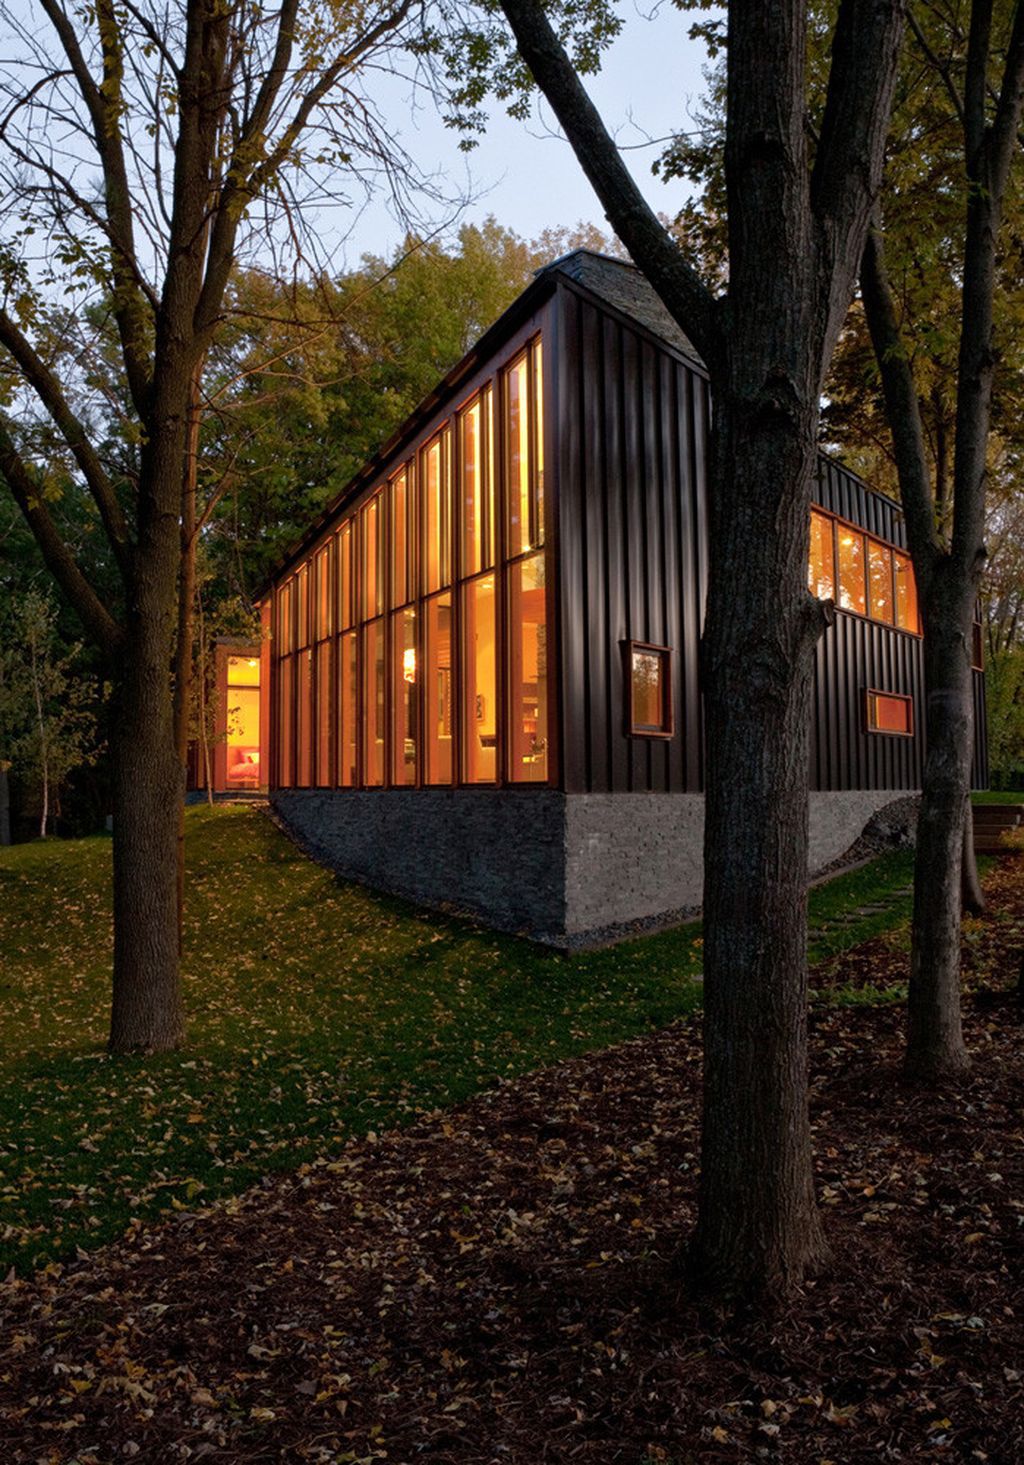 Farquar Lake residence, impressive house by ALTUS architecture + design